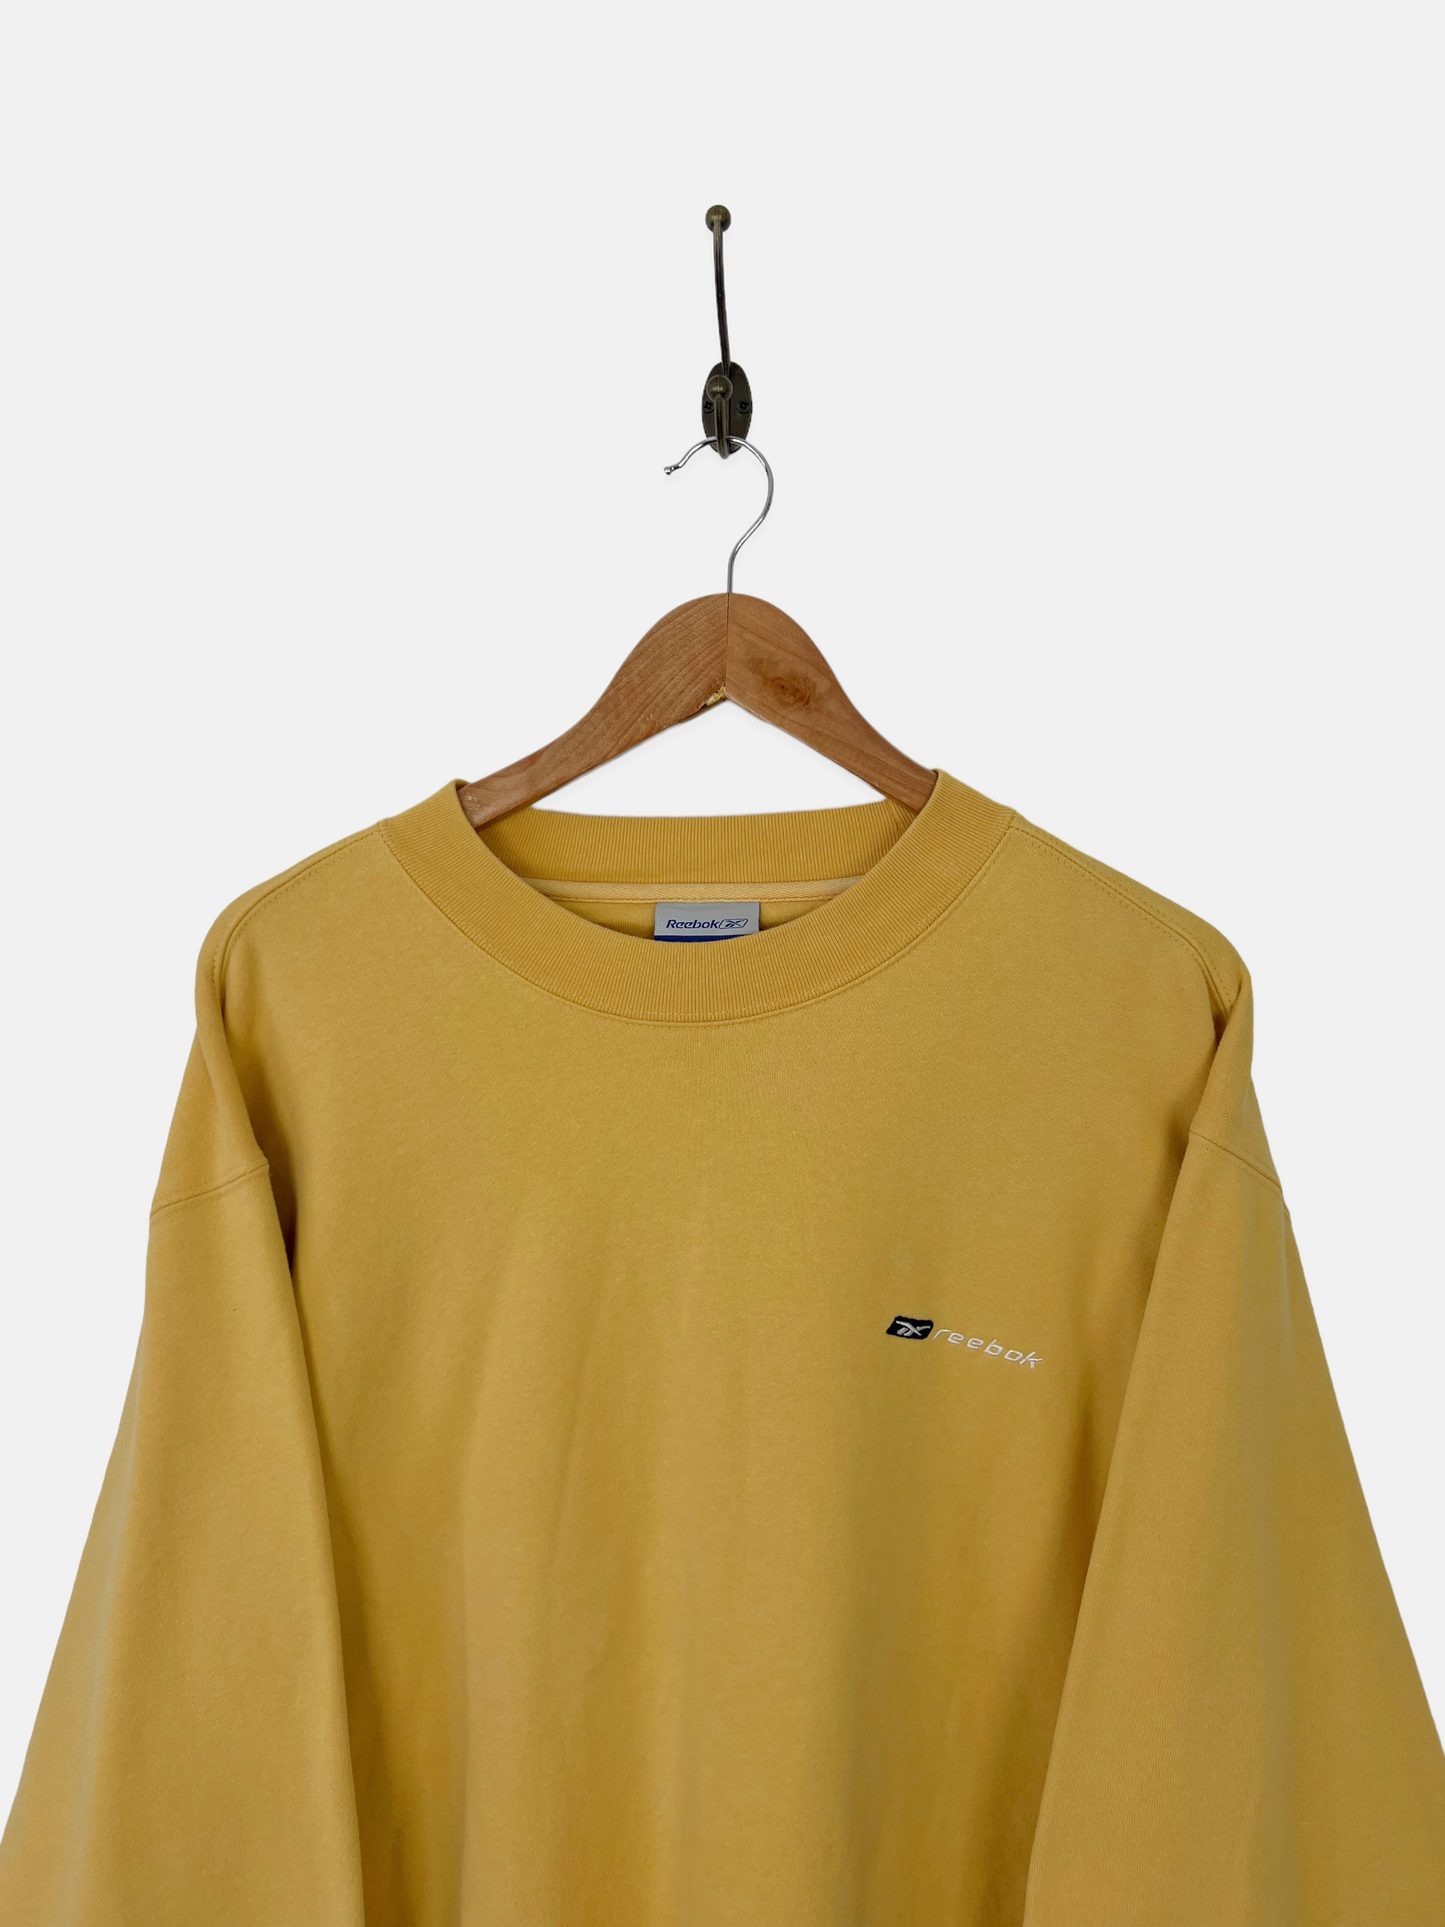 90's Reebok Embroidered Vintage Sweatshirt Size M-L